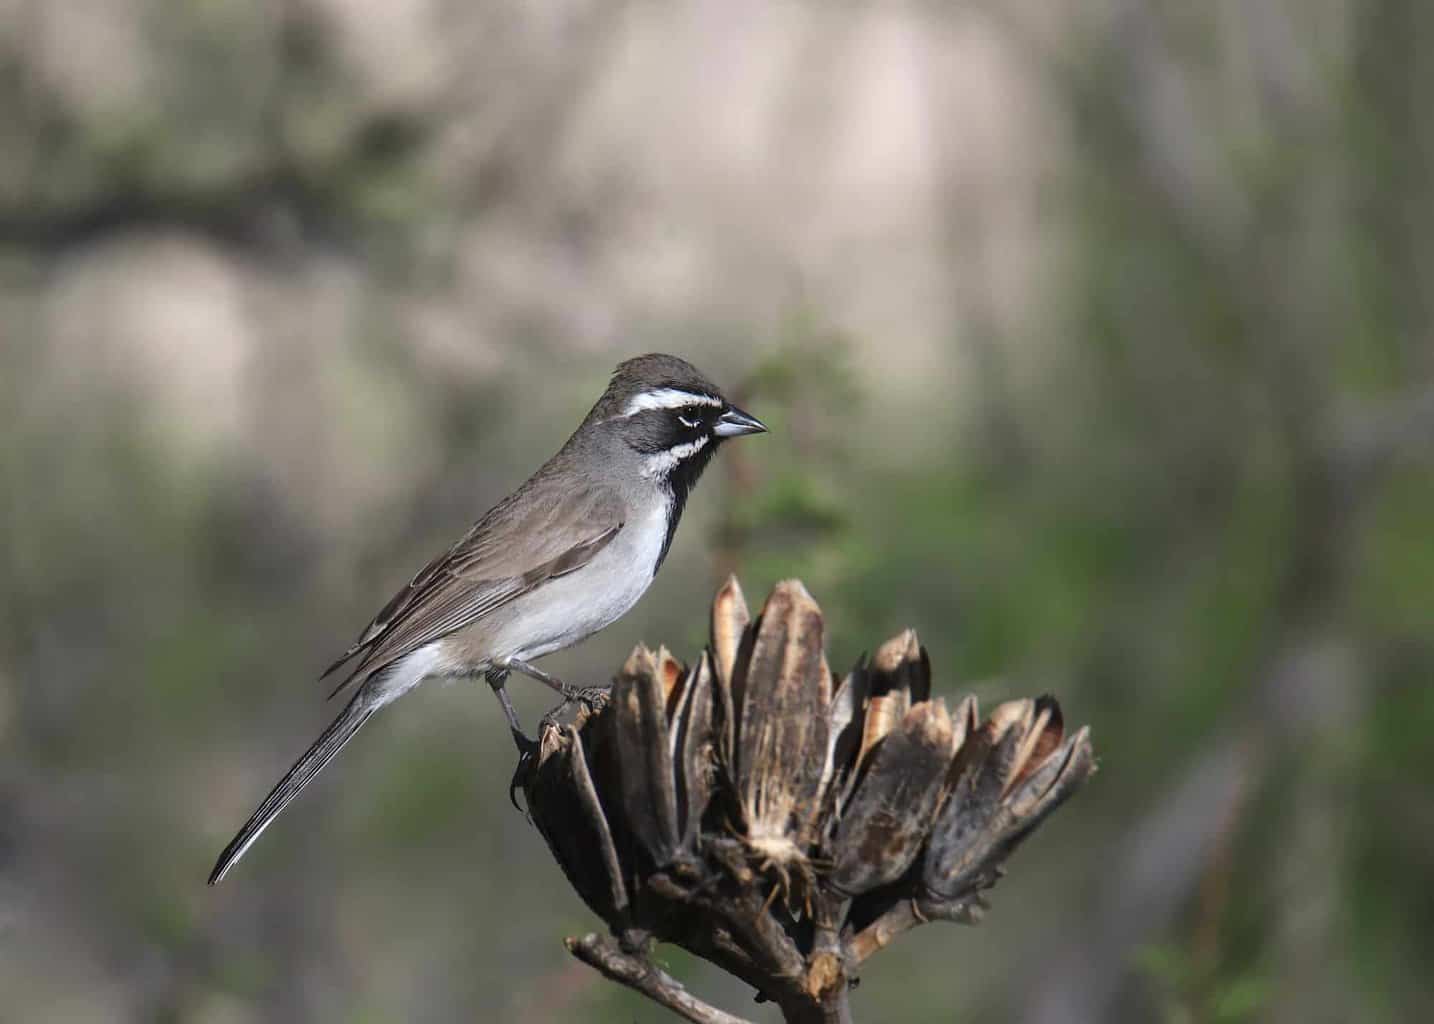 Sparrows in New Mexico